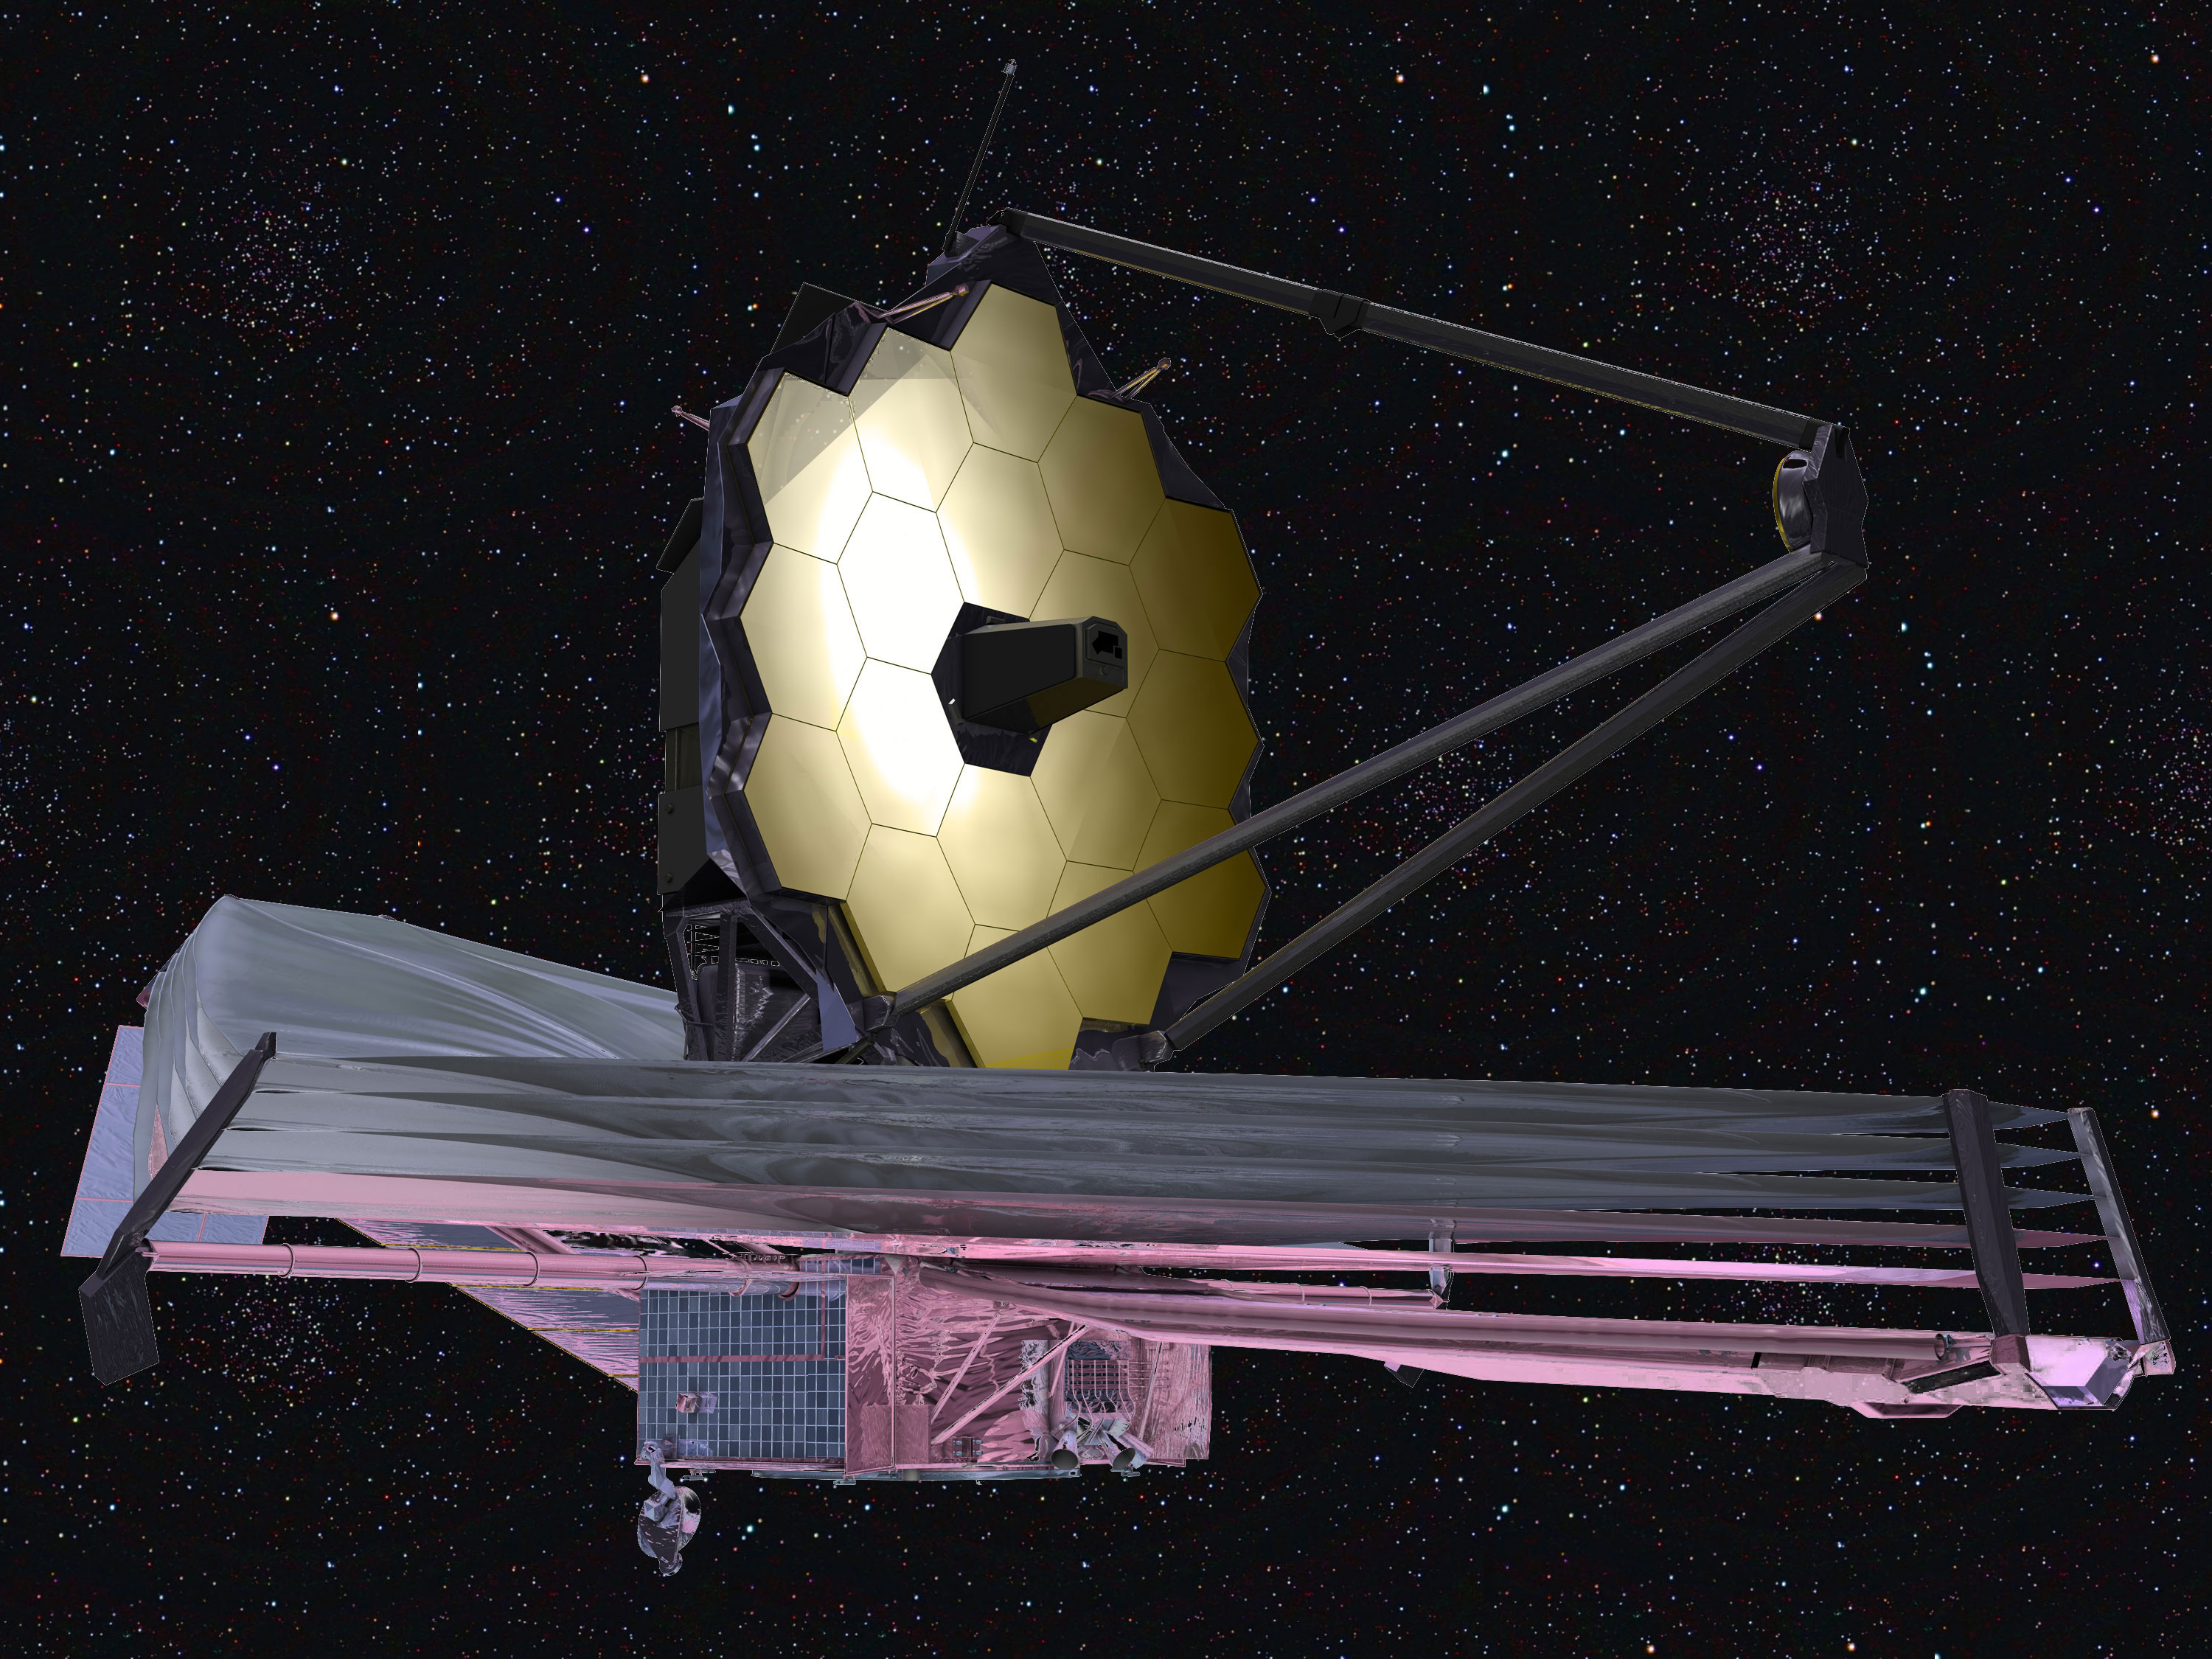 nasa releases sharp webb space telescope